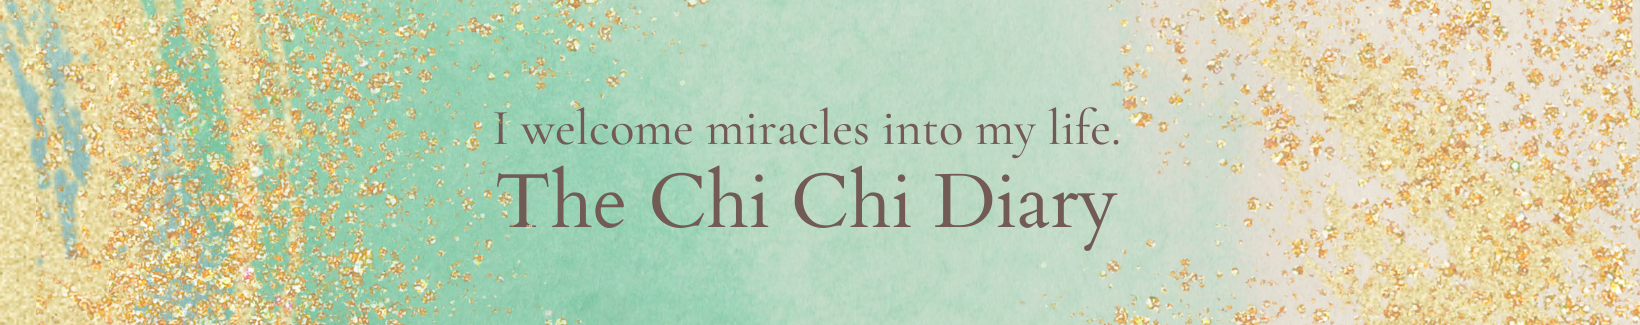 The Chi Chi Diary